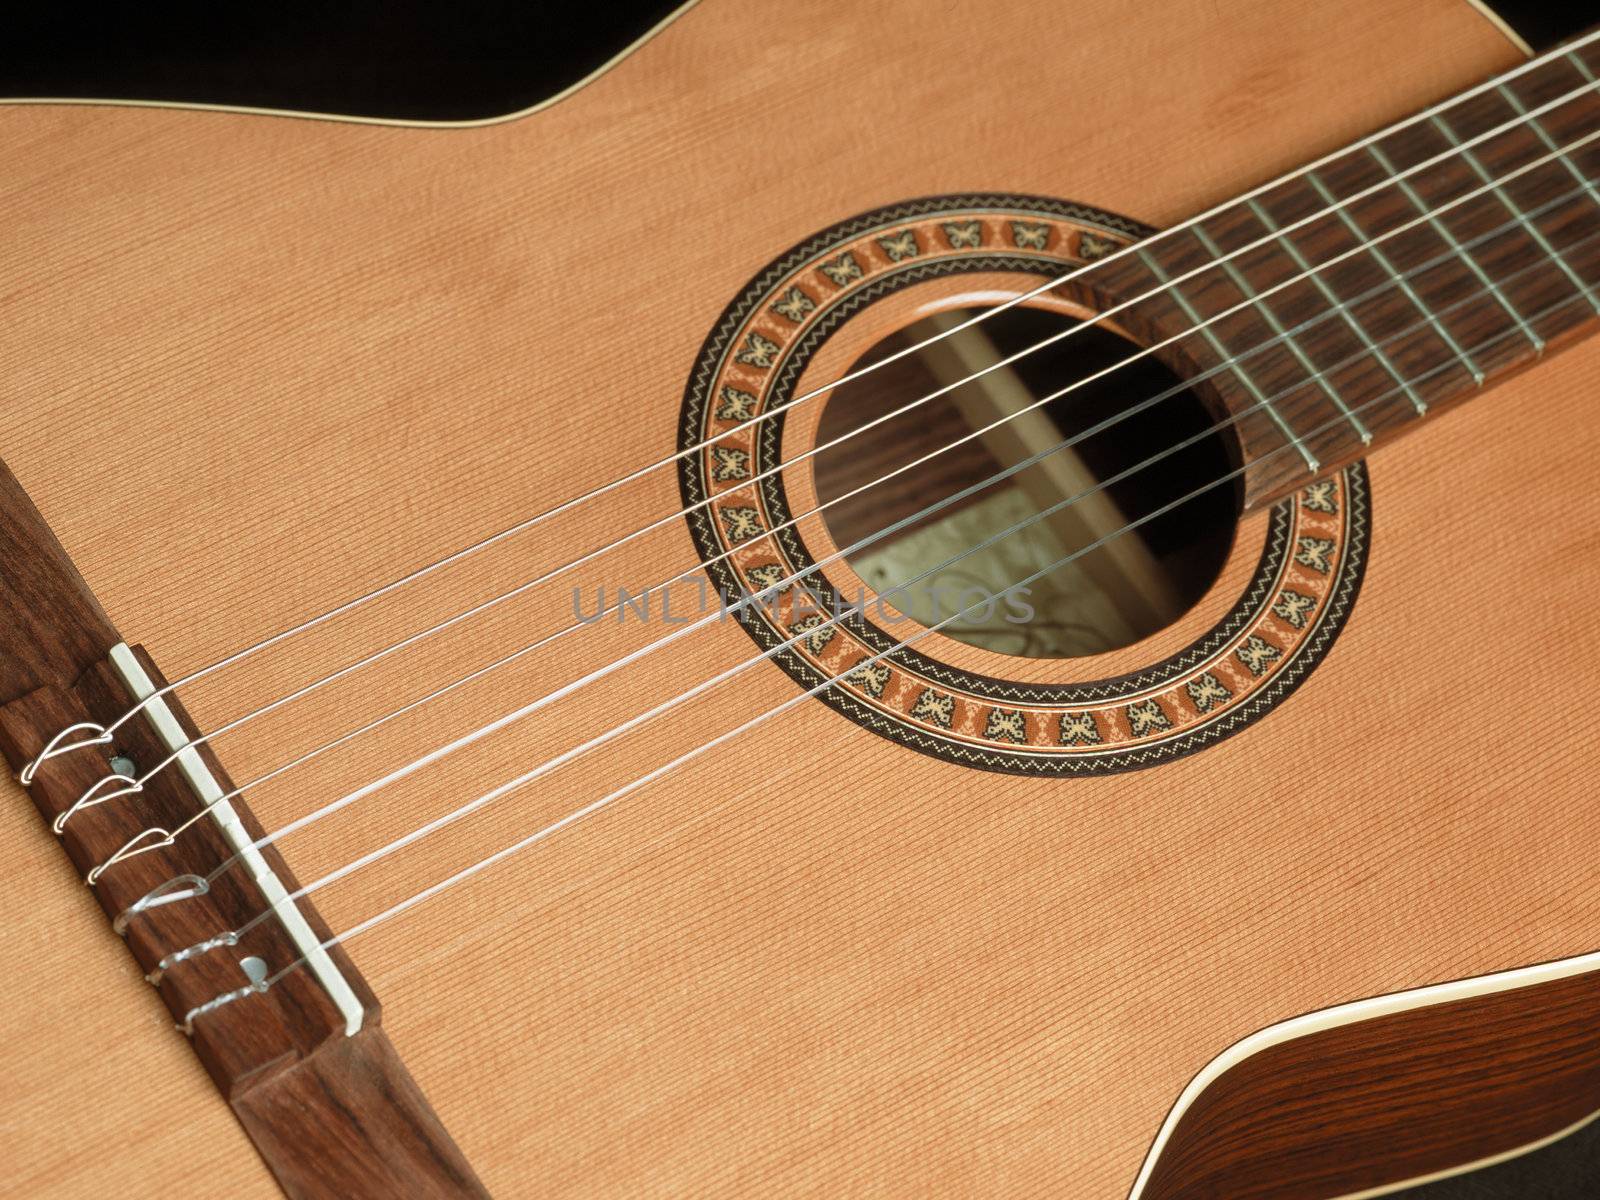 Closeup image of a classical guitar.
